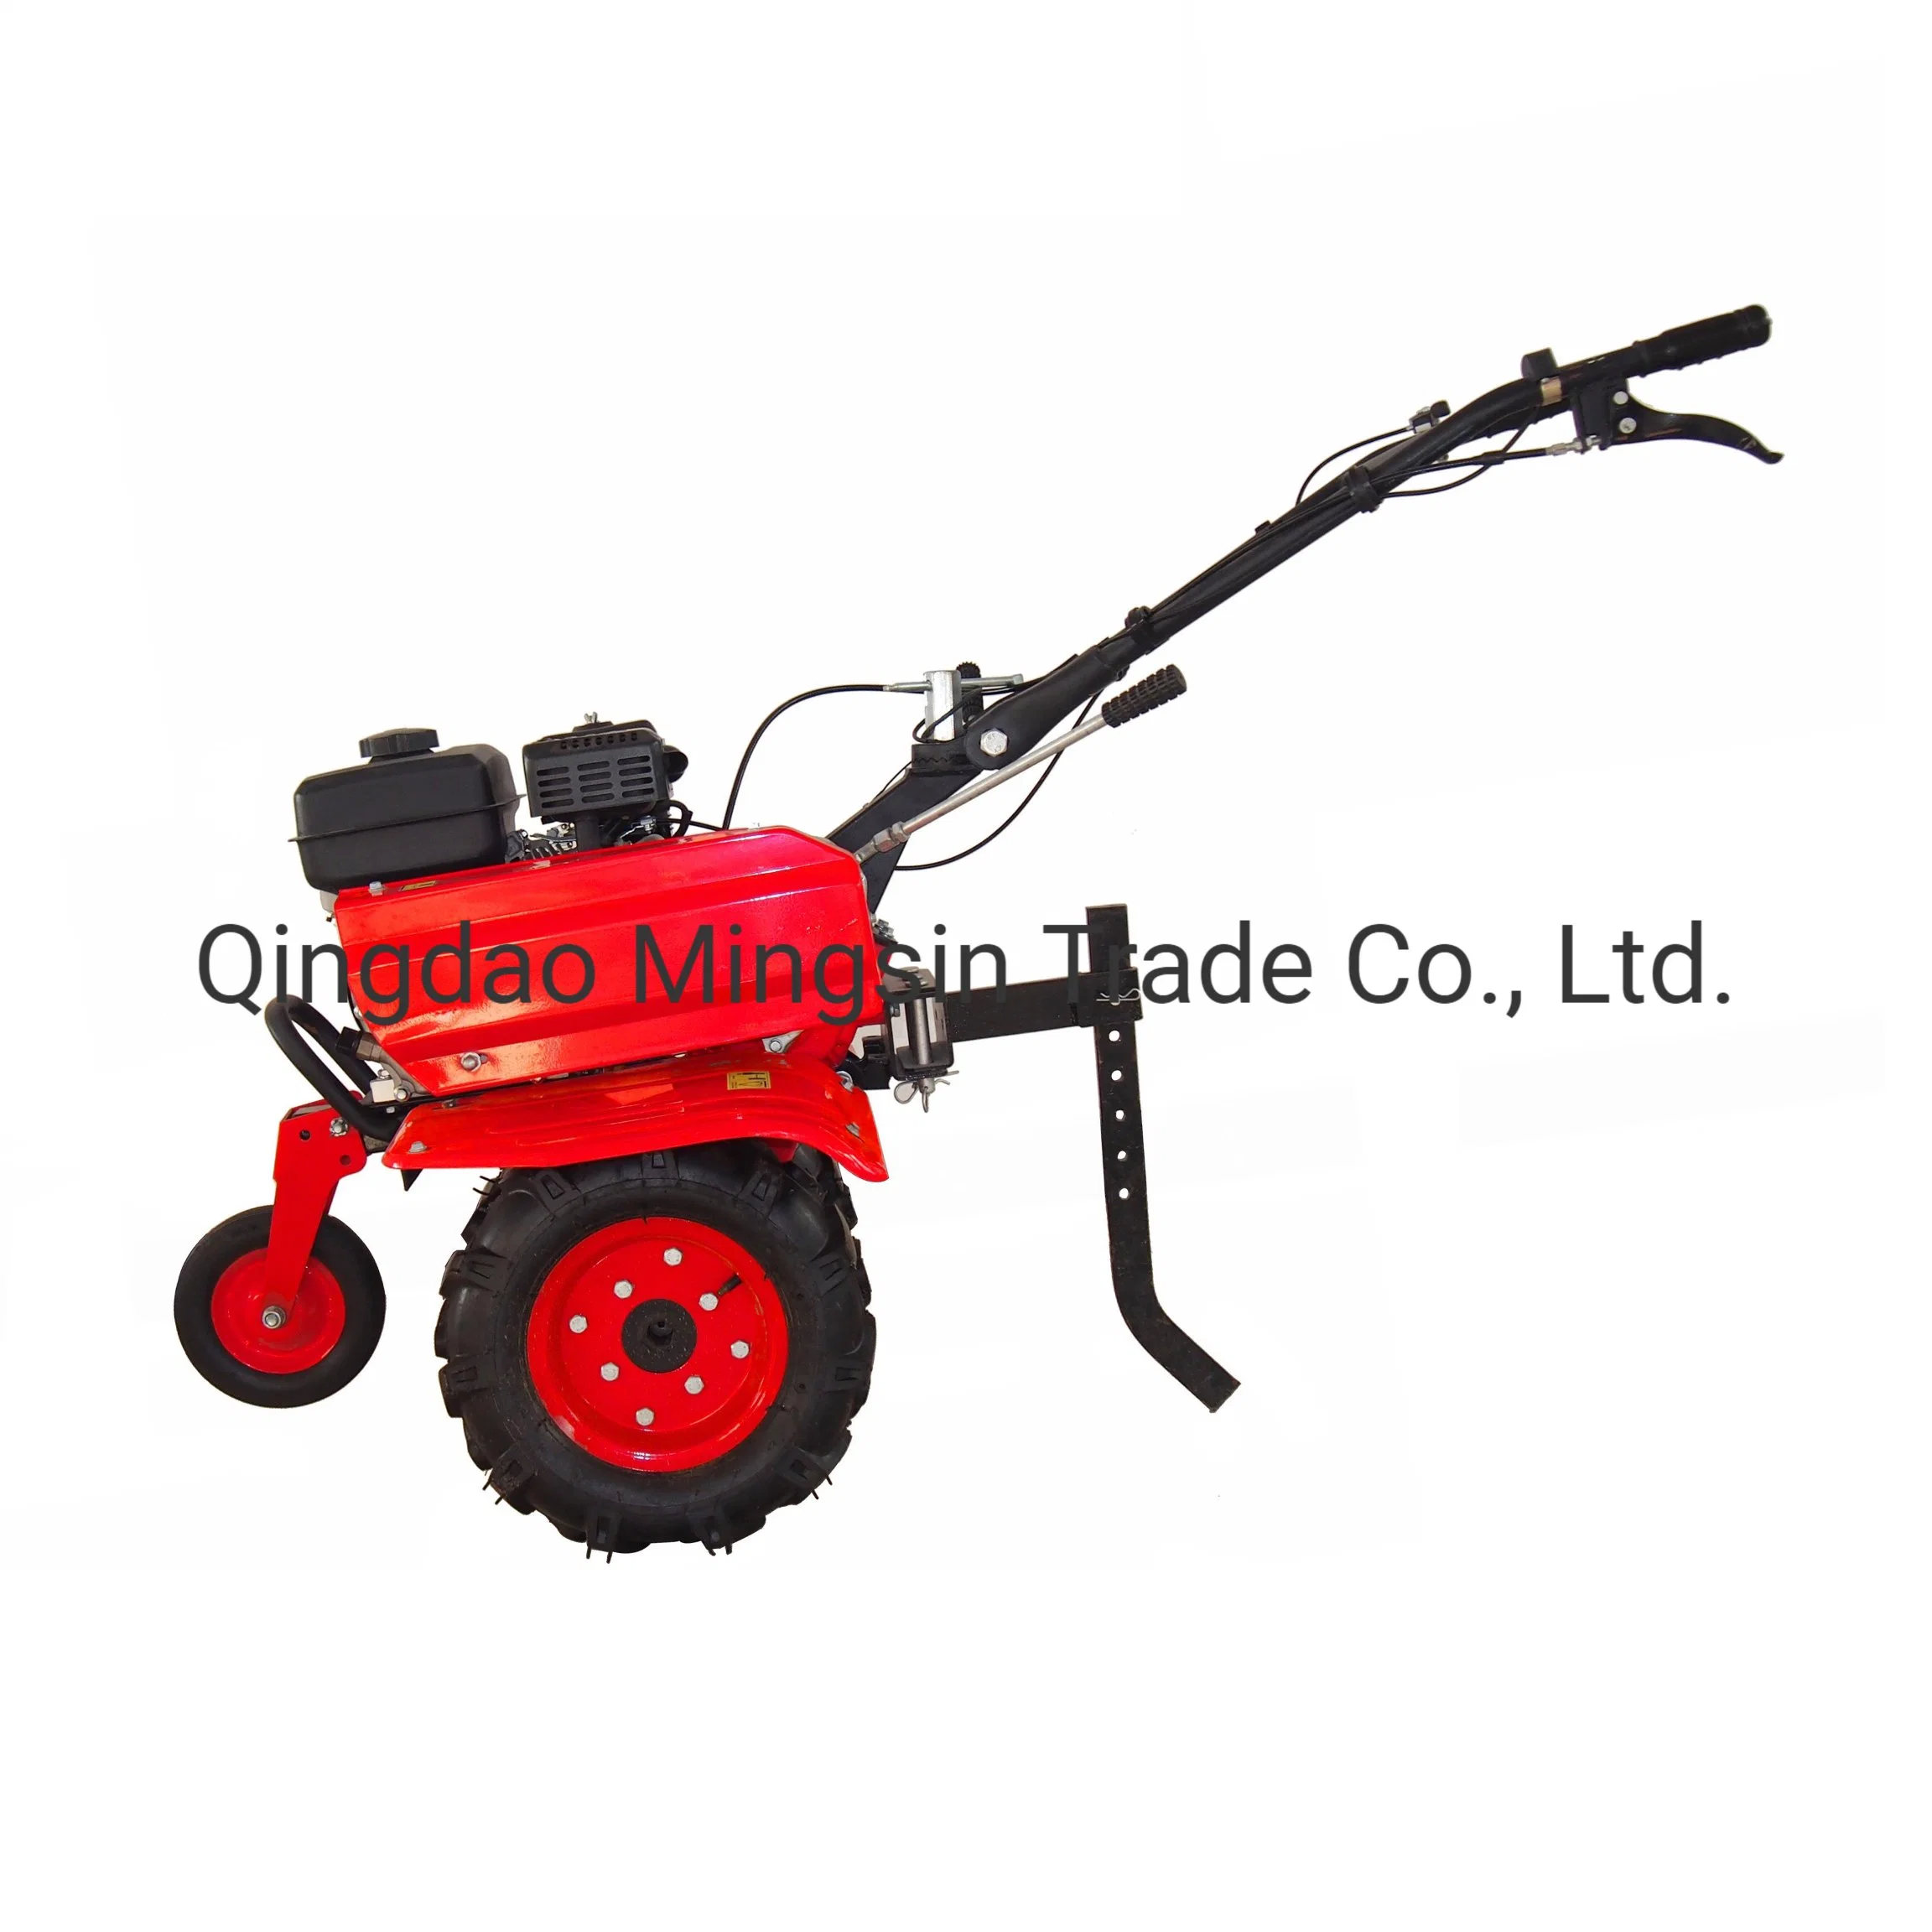 Motocultor, Cultivador, Motocultor Mini, Modelo Gt500A/Gt900A